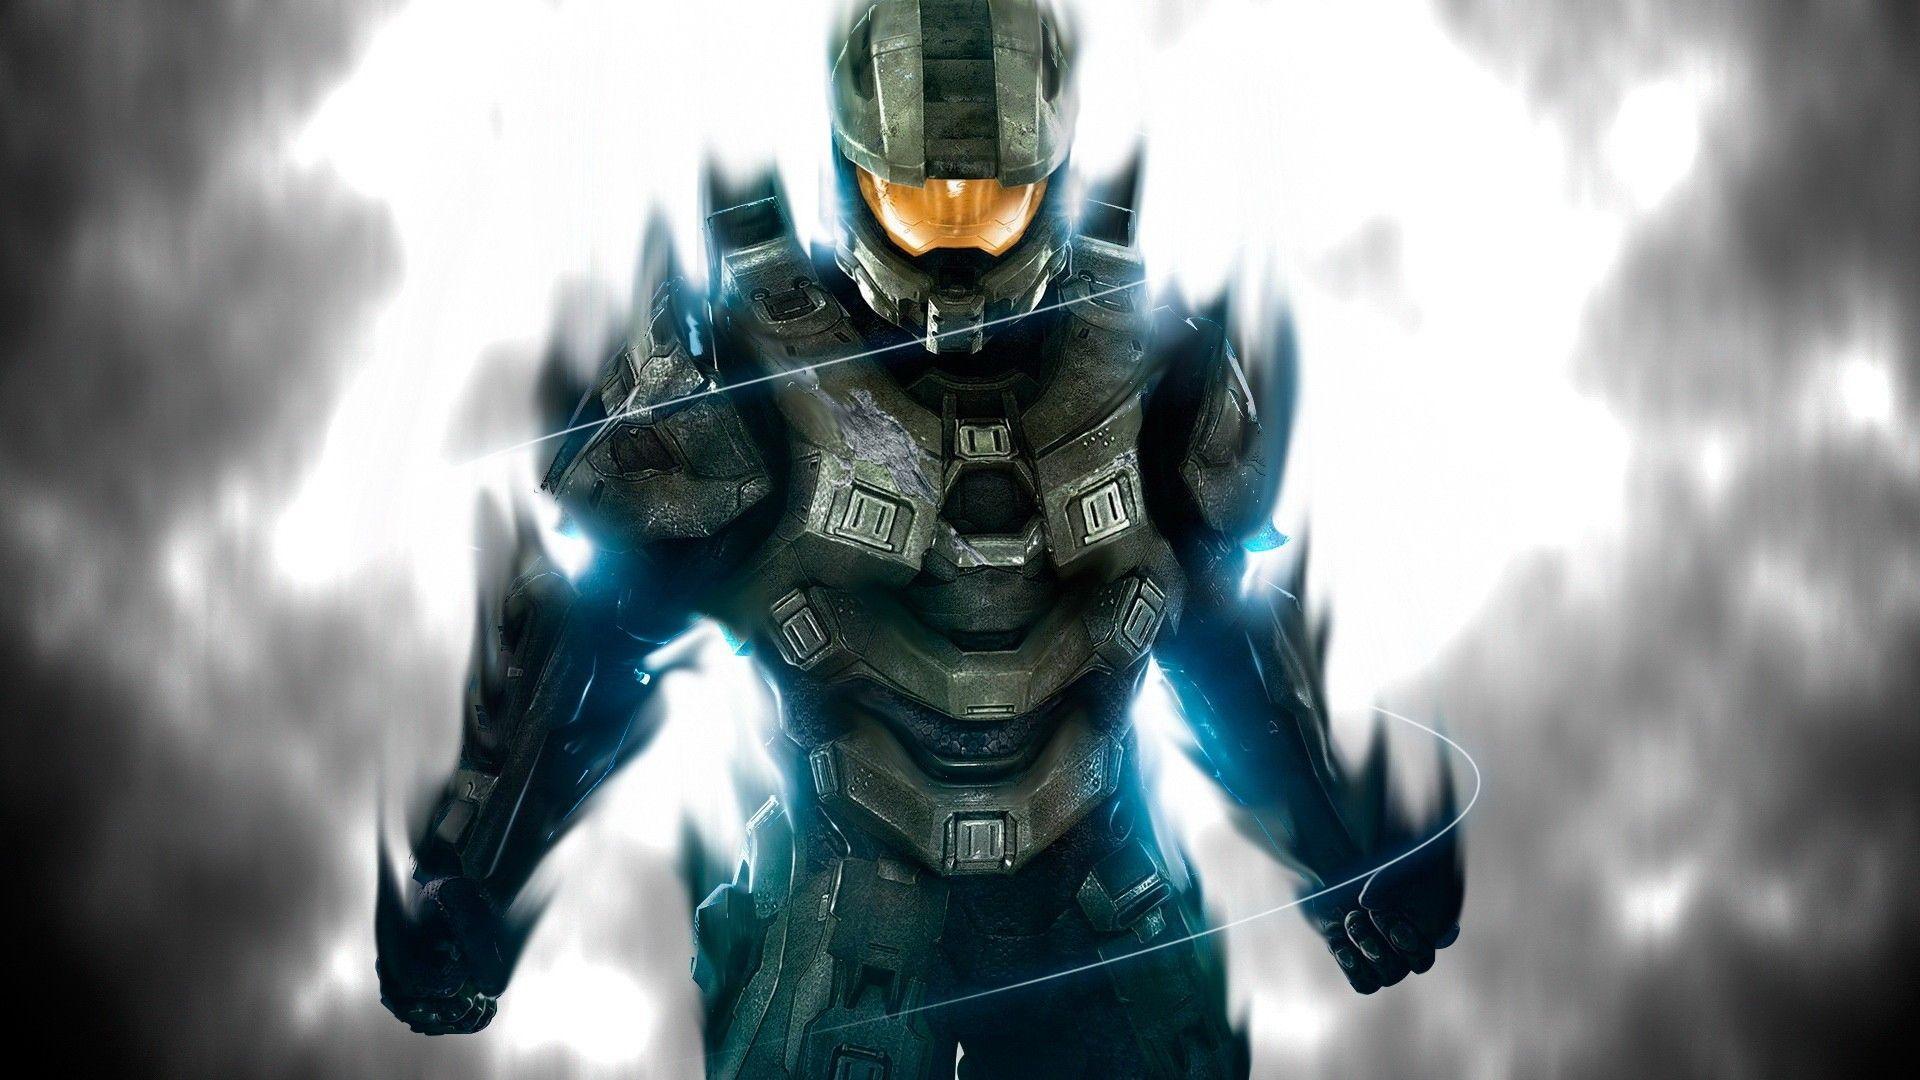 Halo 4 Xbox 360 Desktop Wallpaper. New Games Wallpaper